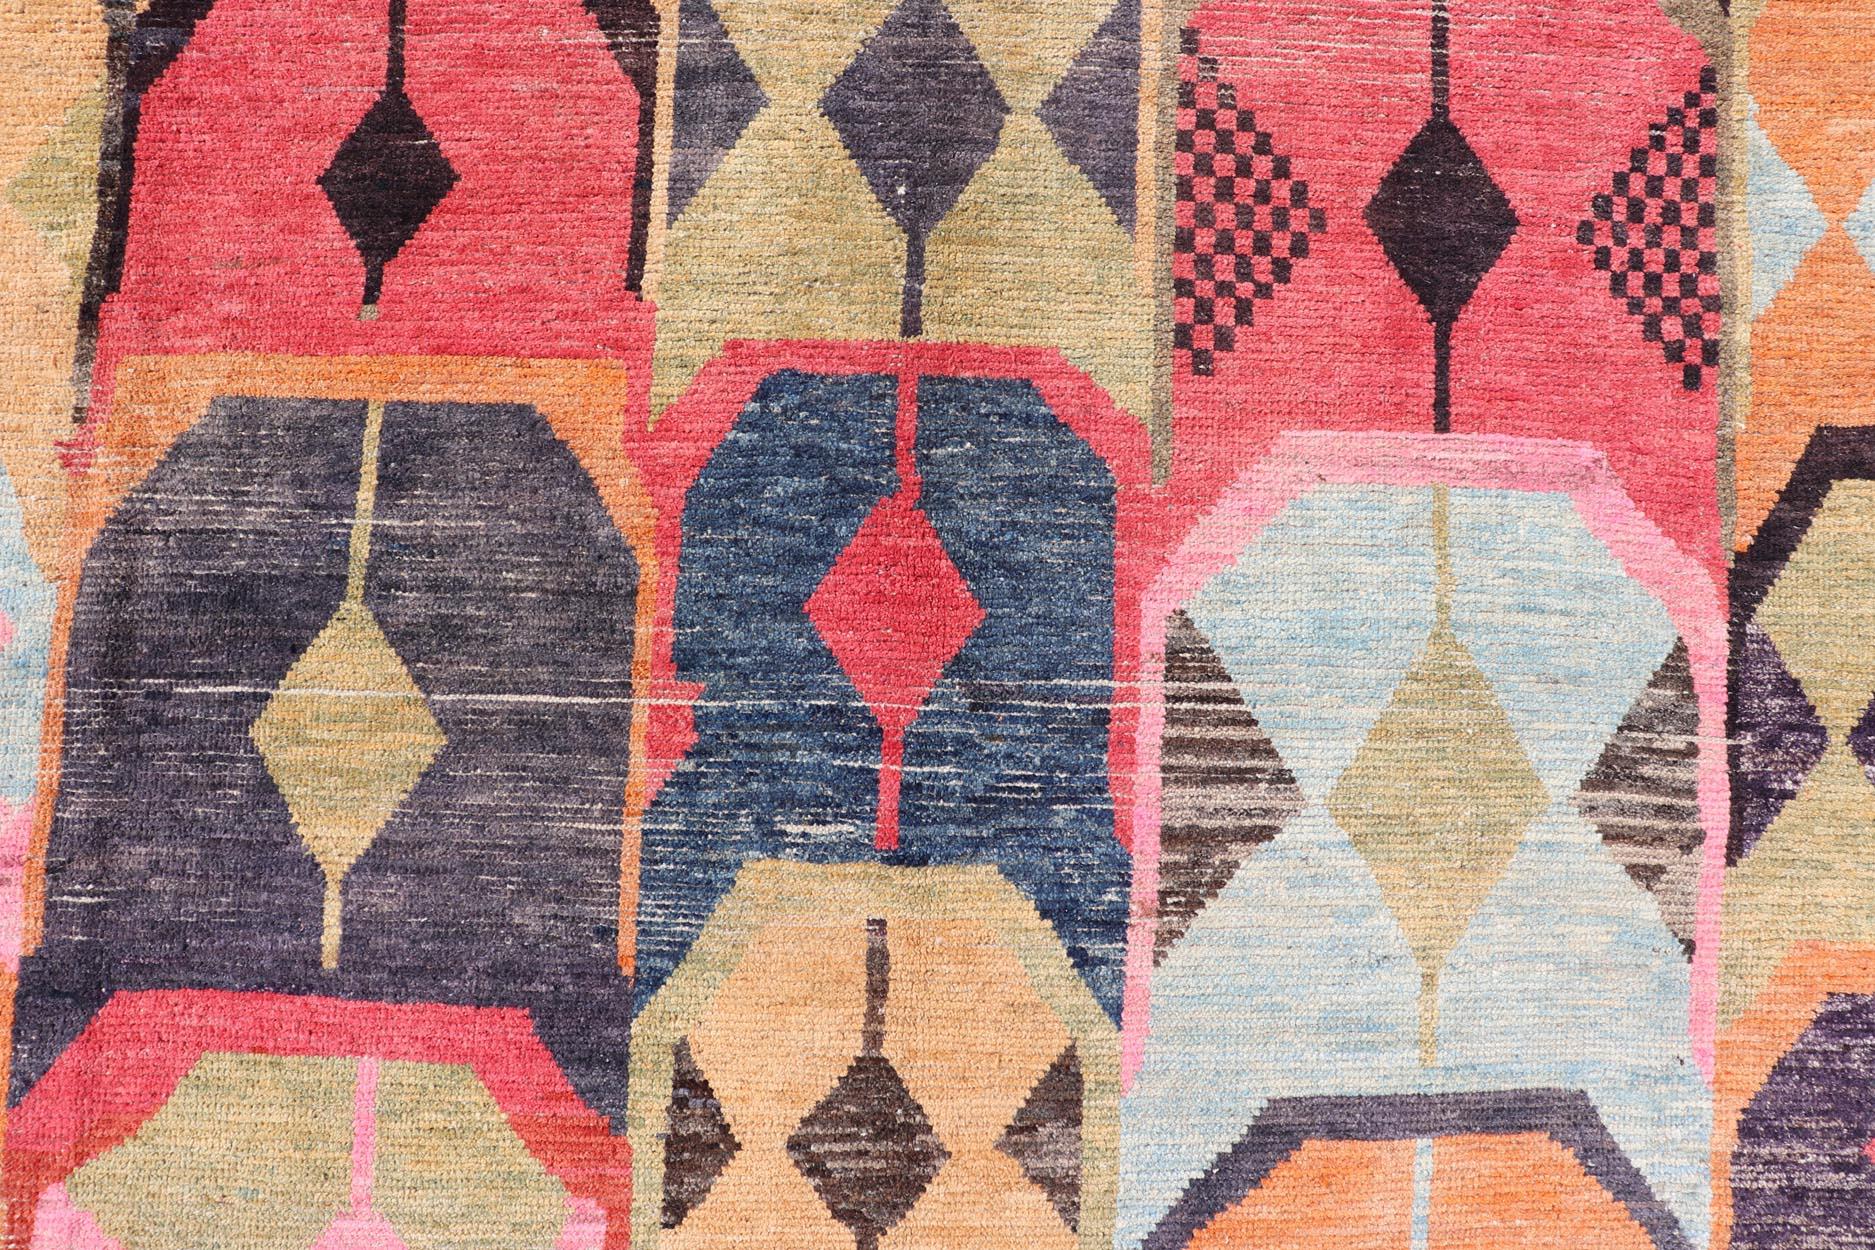 Multicolor Modern Rug in Art Deco Design, Keivan Woven Arts; rug AFG-40933, country of origin / type: Afghanistan / Modern Casual, circa early-21th century.

Measures: 9'5 x 12'1.

Multicolor Modern Rug in Art Deco Design. This modern rug has been